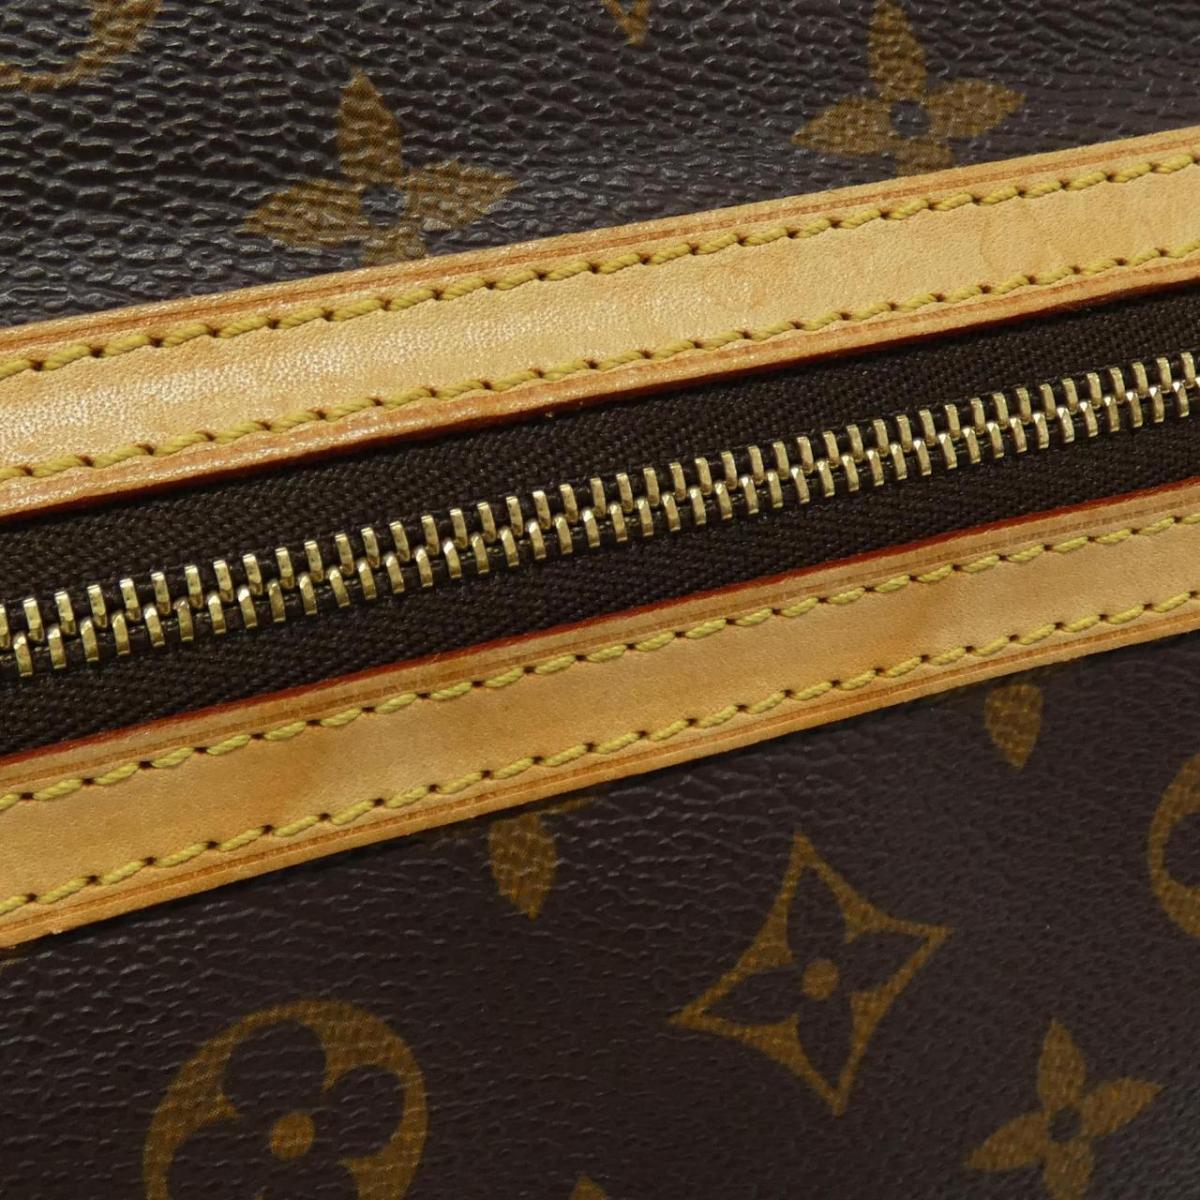 Louis Vuitton Monogram Poschet Bosphor M40044 Shoulder Bag